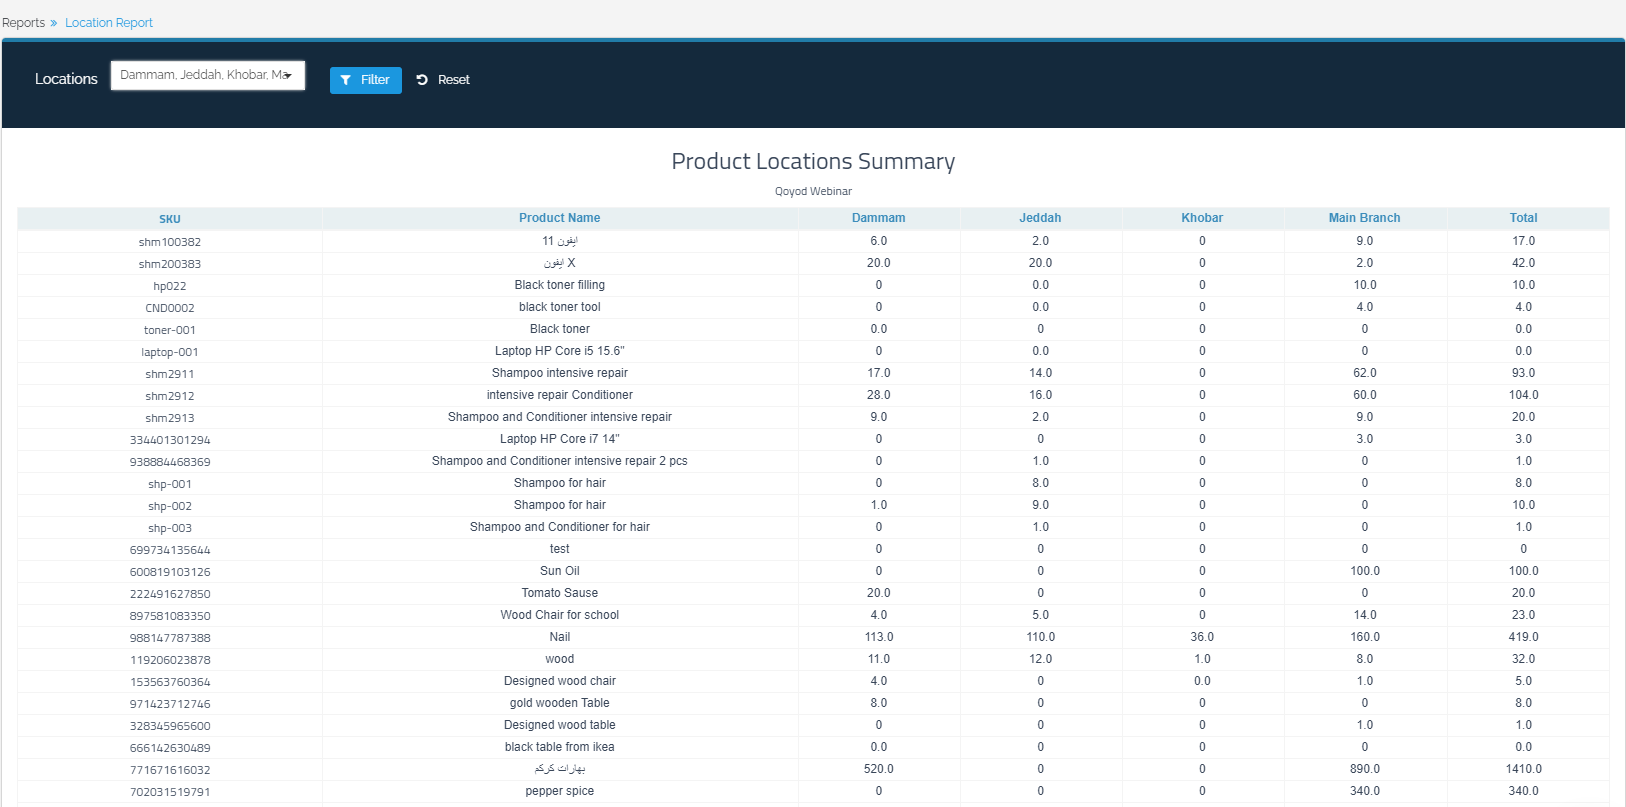 Product Locations Summary - Qoyod